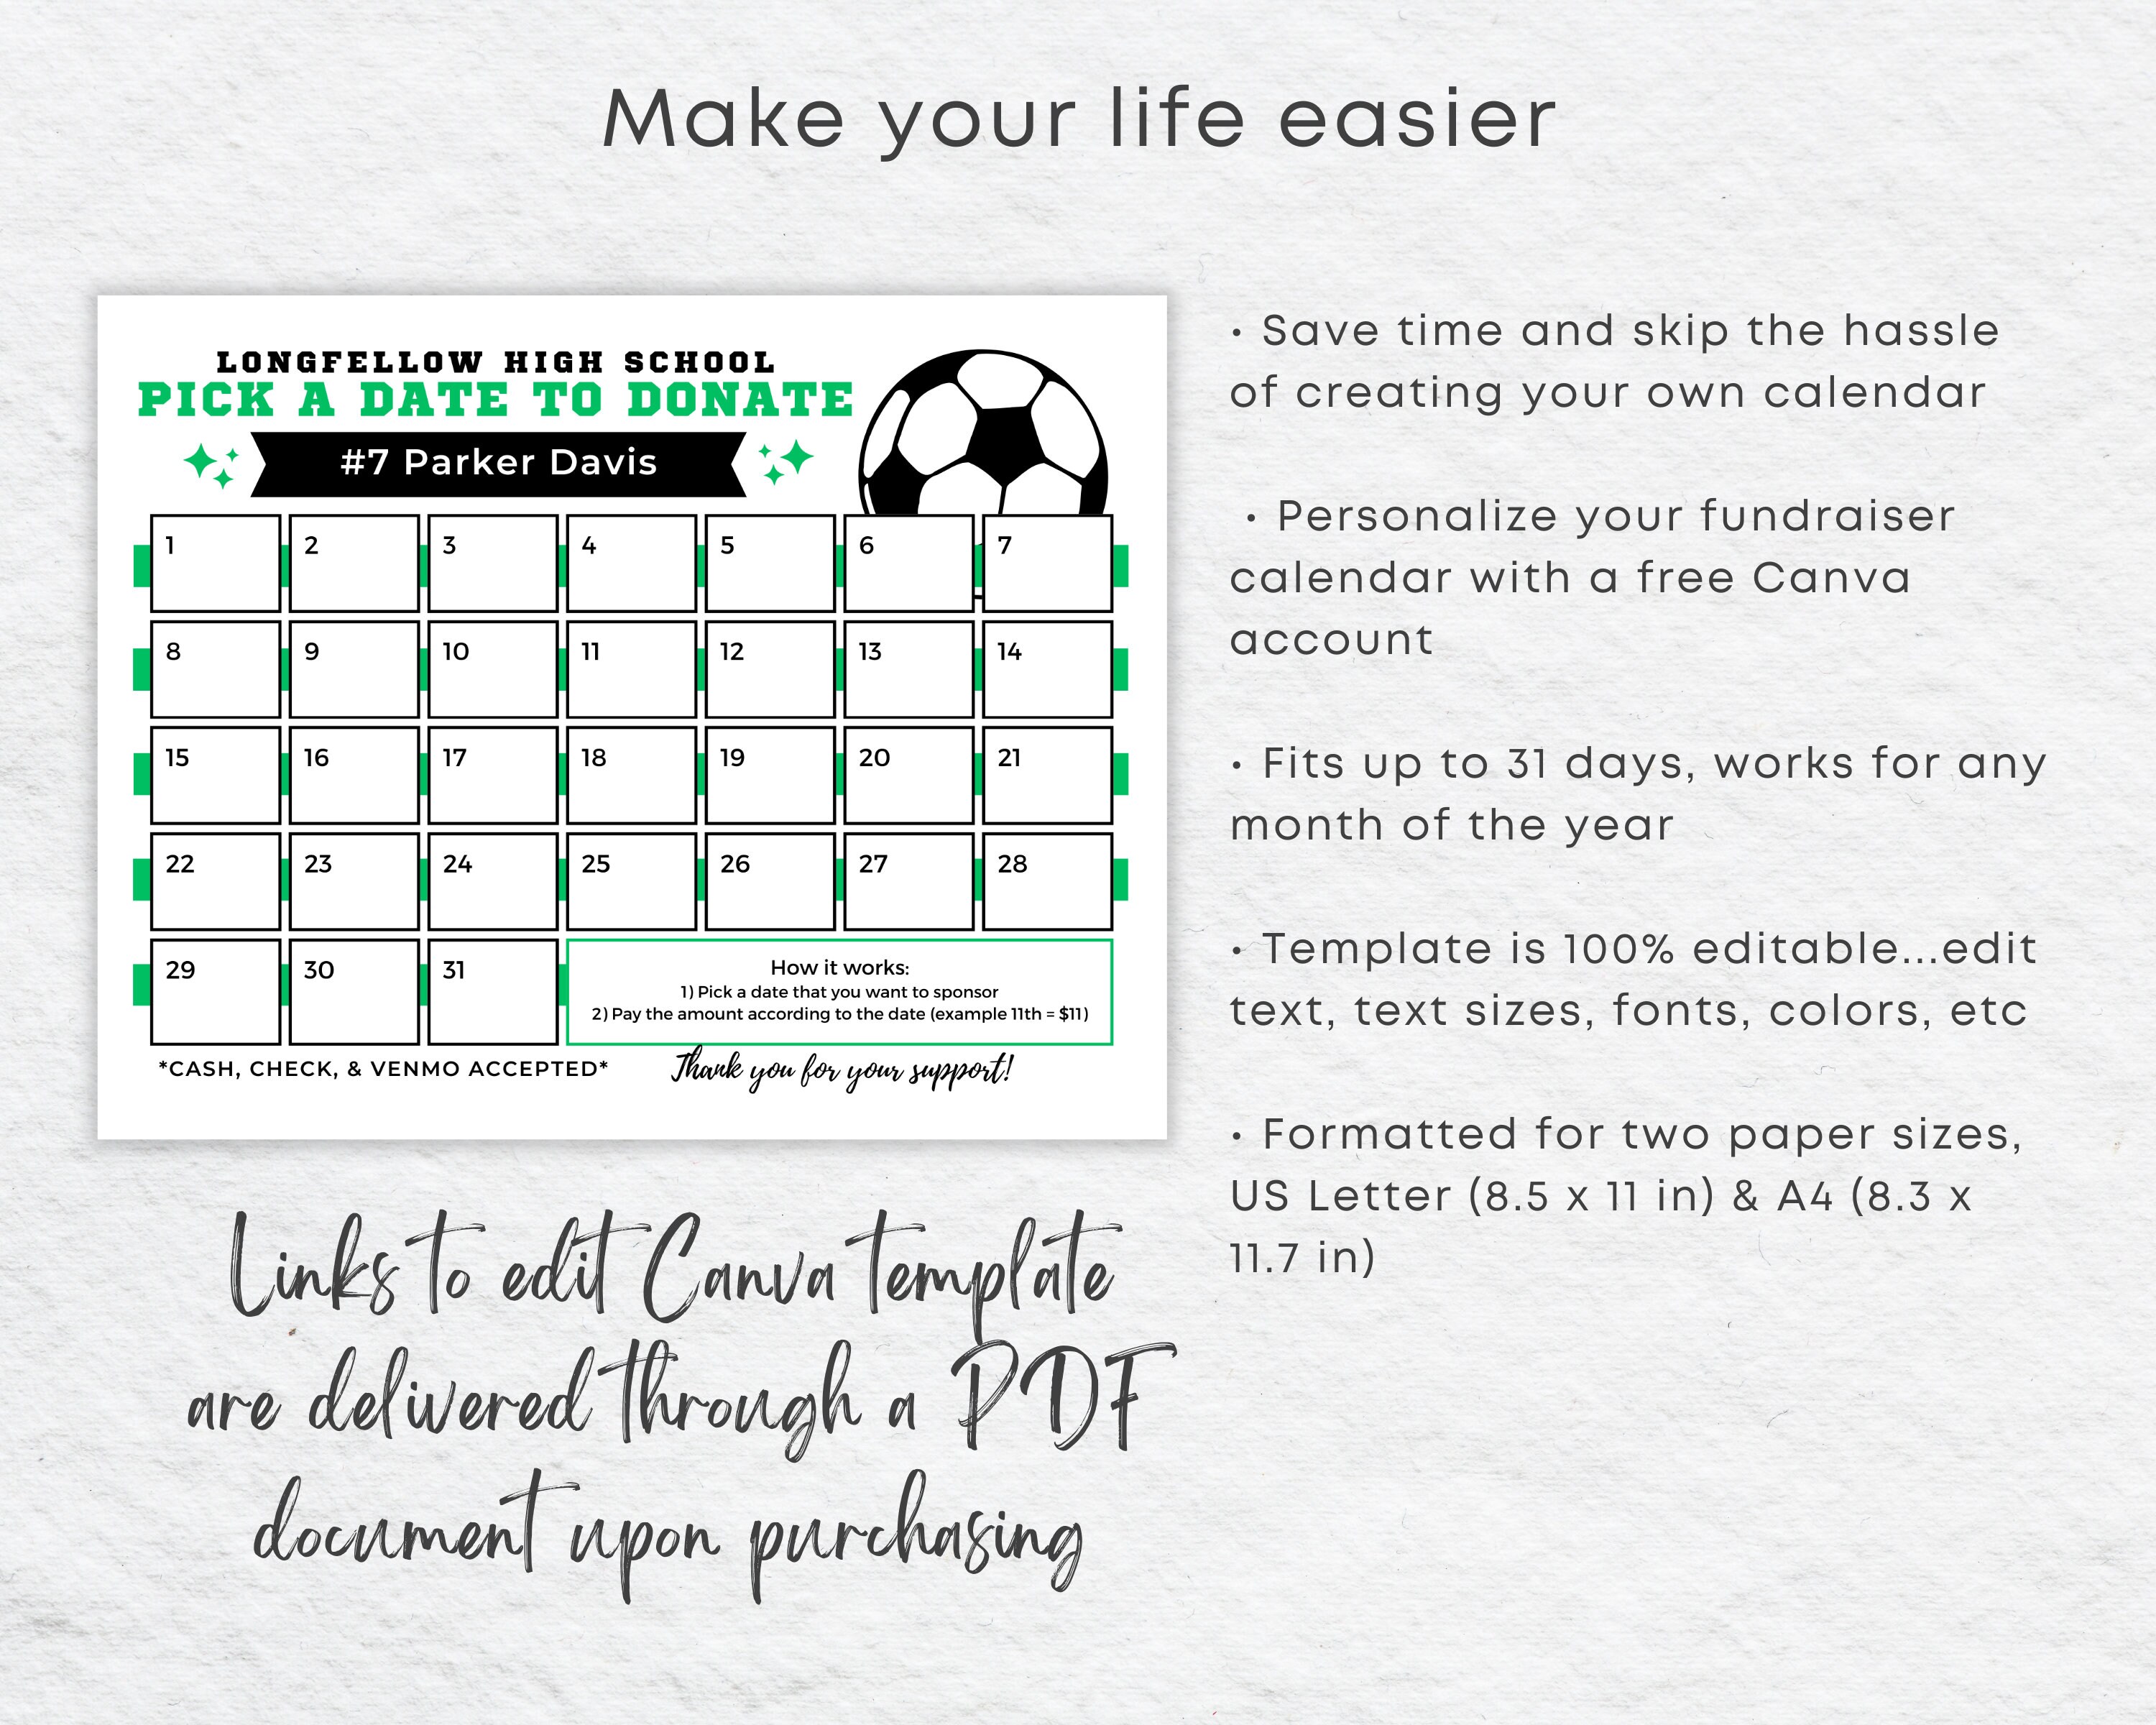 Editable Pick A Date To Donate Soccer Fundraiser Calendar 